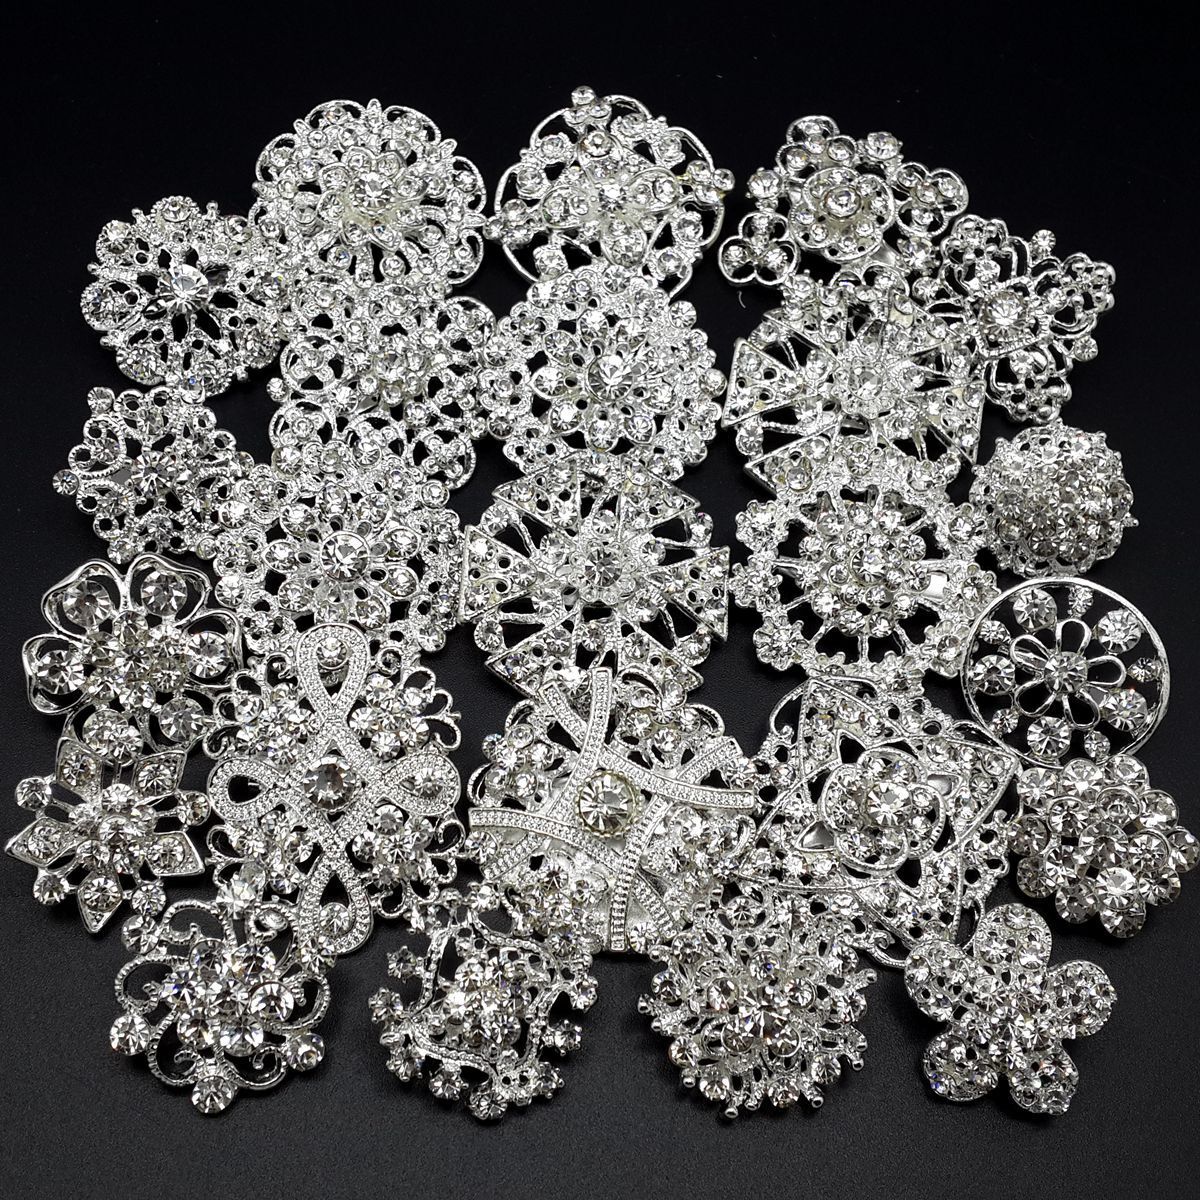 24pc/lot Mixed Silver Rhinestone Crystal Brooches Pin DIY Wedding Bridal Bouquet